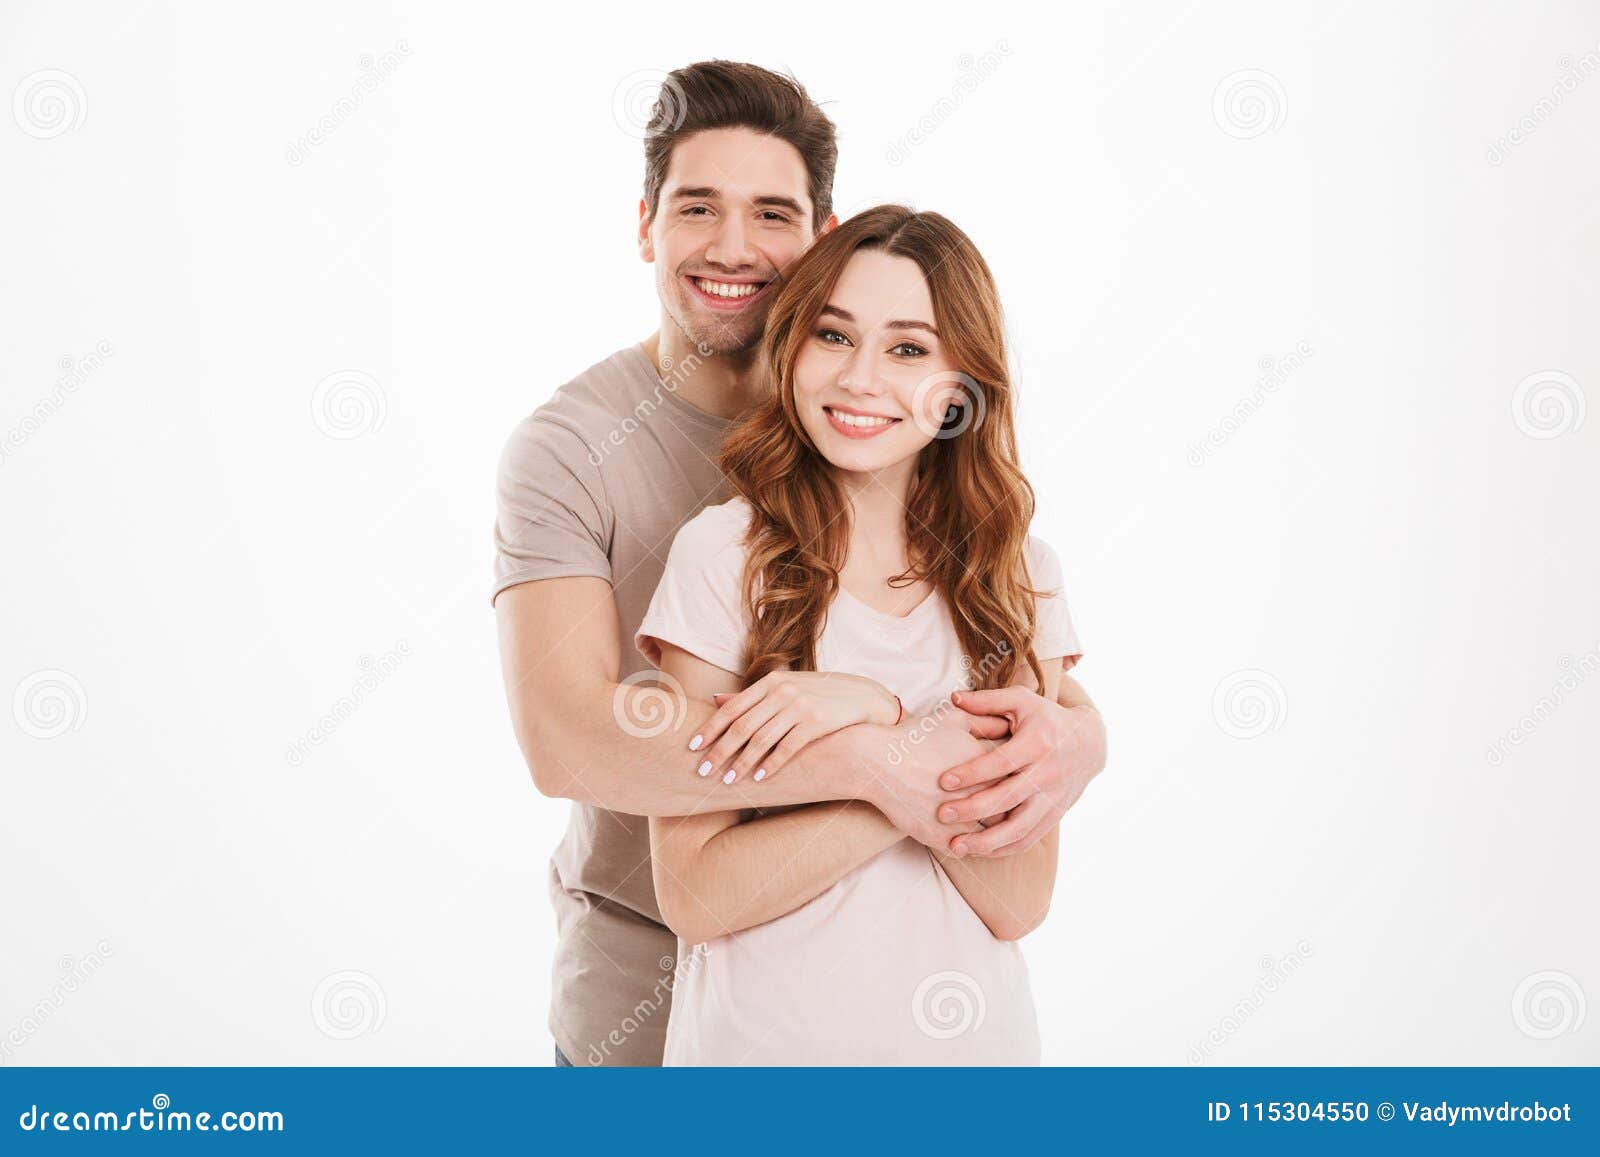 New style couple photoshoot pose | Girlfriend boyfriend photo pose | Couple  photography poses ideas - YouTube